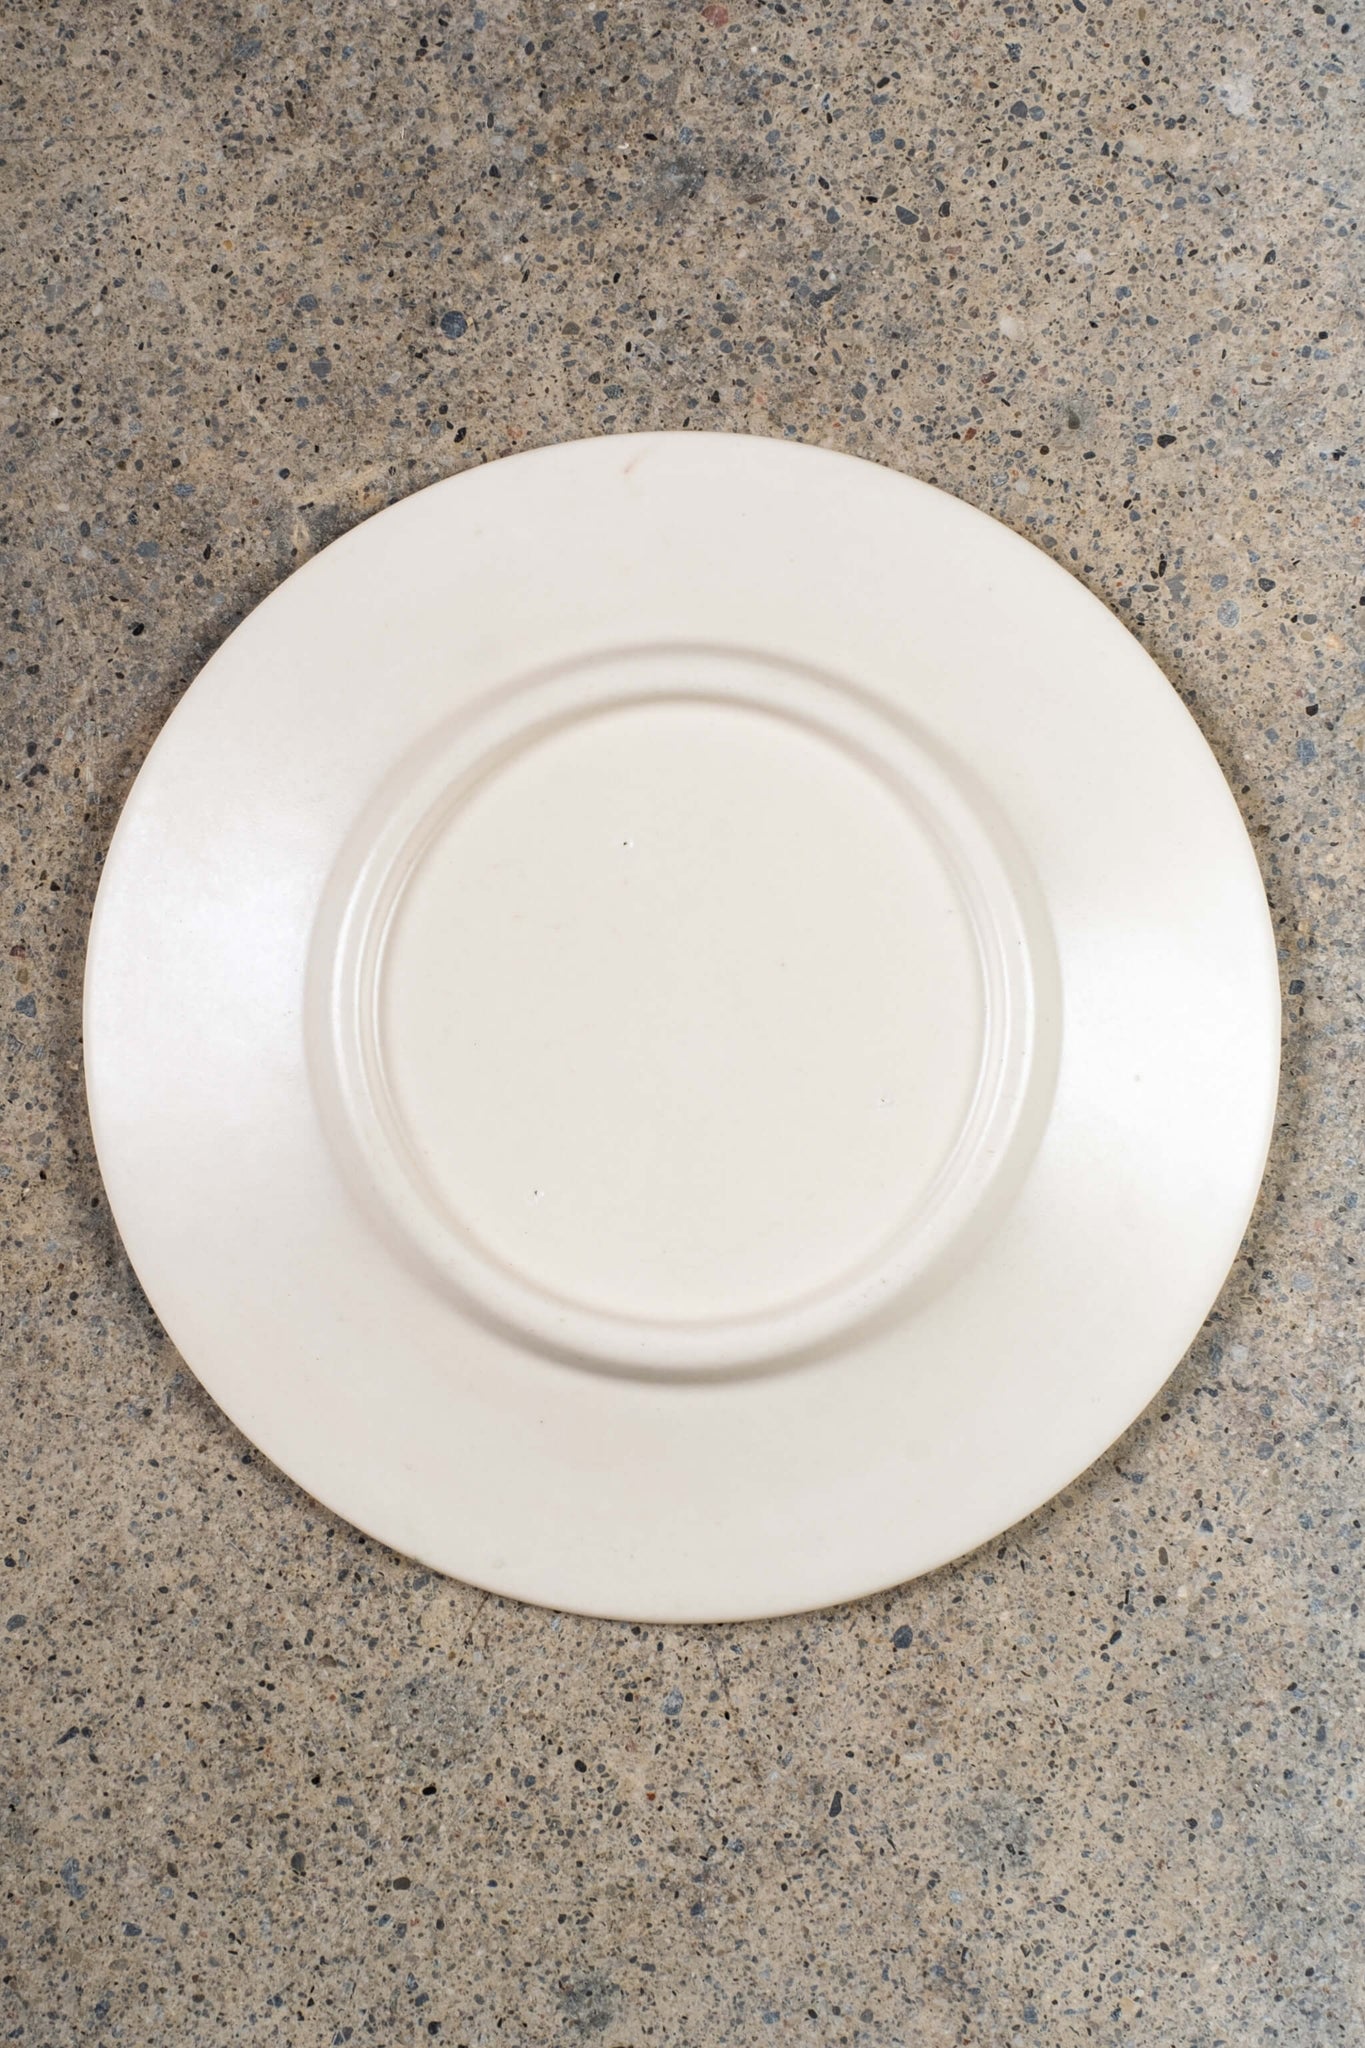 Vintage Ceramic Glaze Testing Plate No. 1, underside